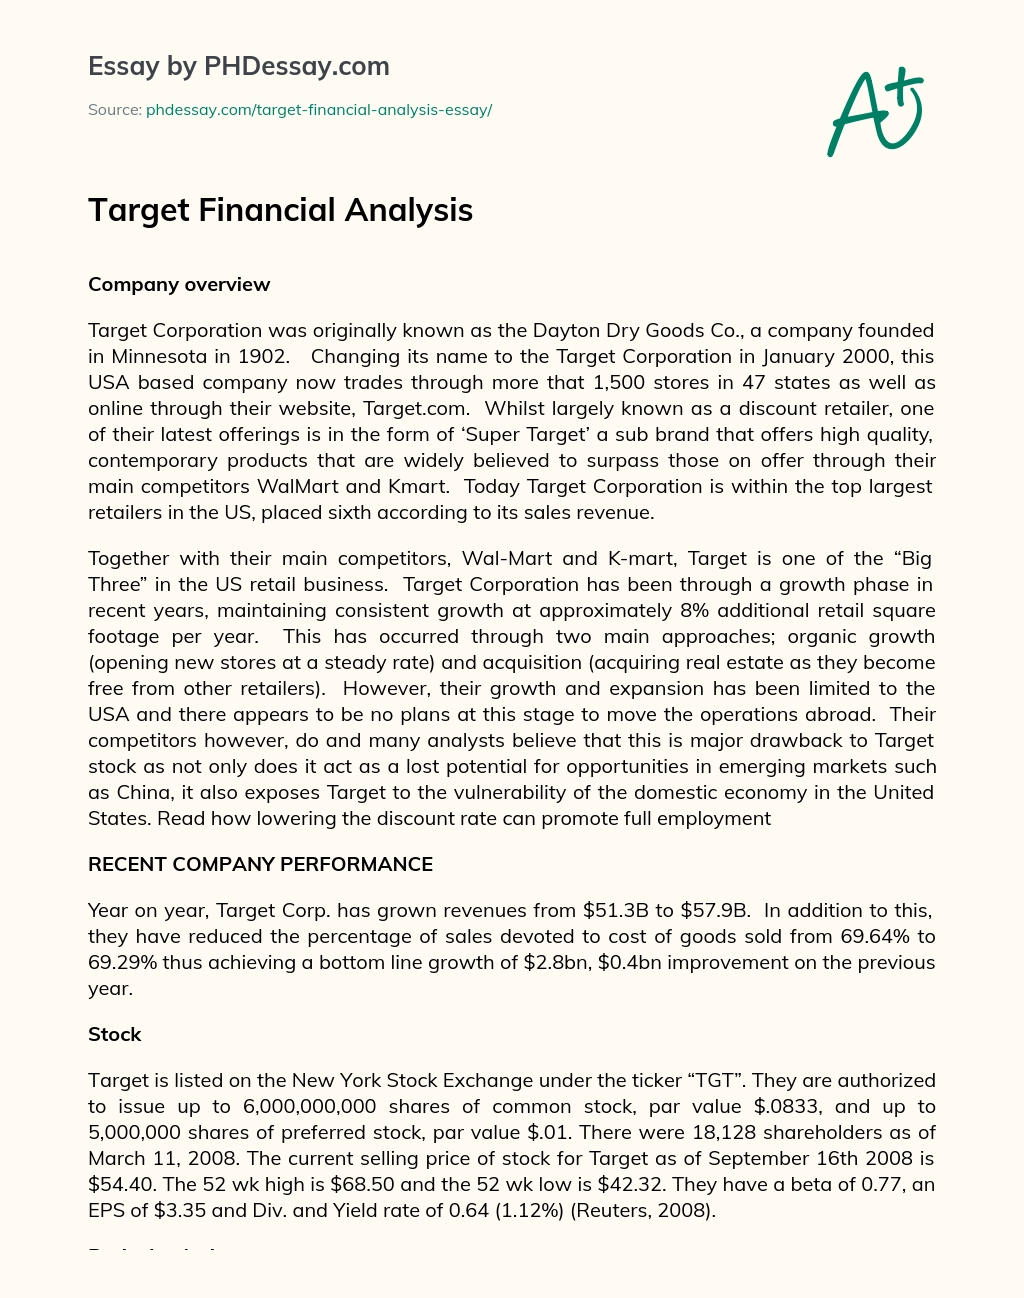 Target Financial Analysis Argumentative Essay essay